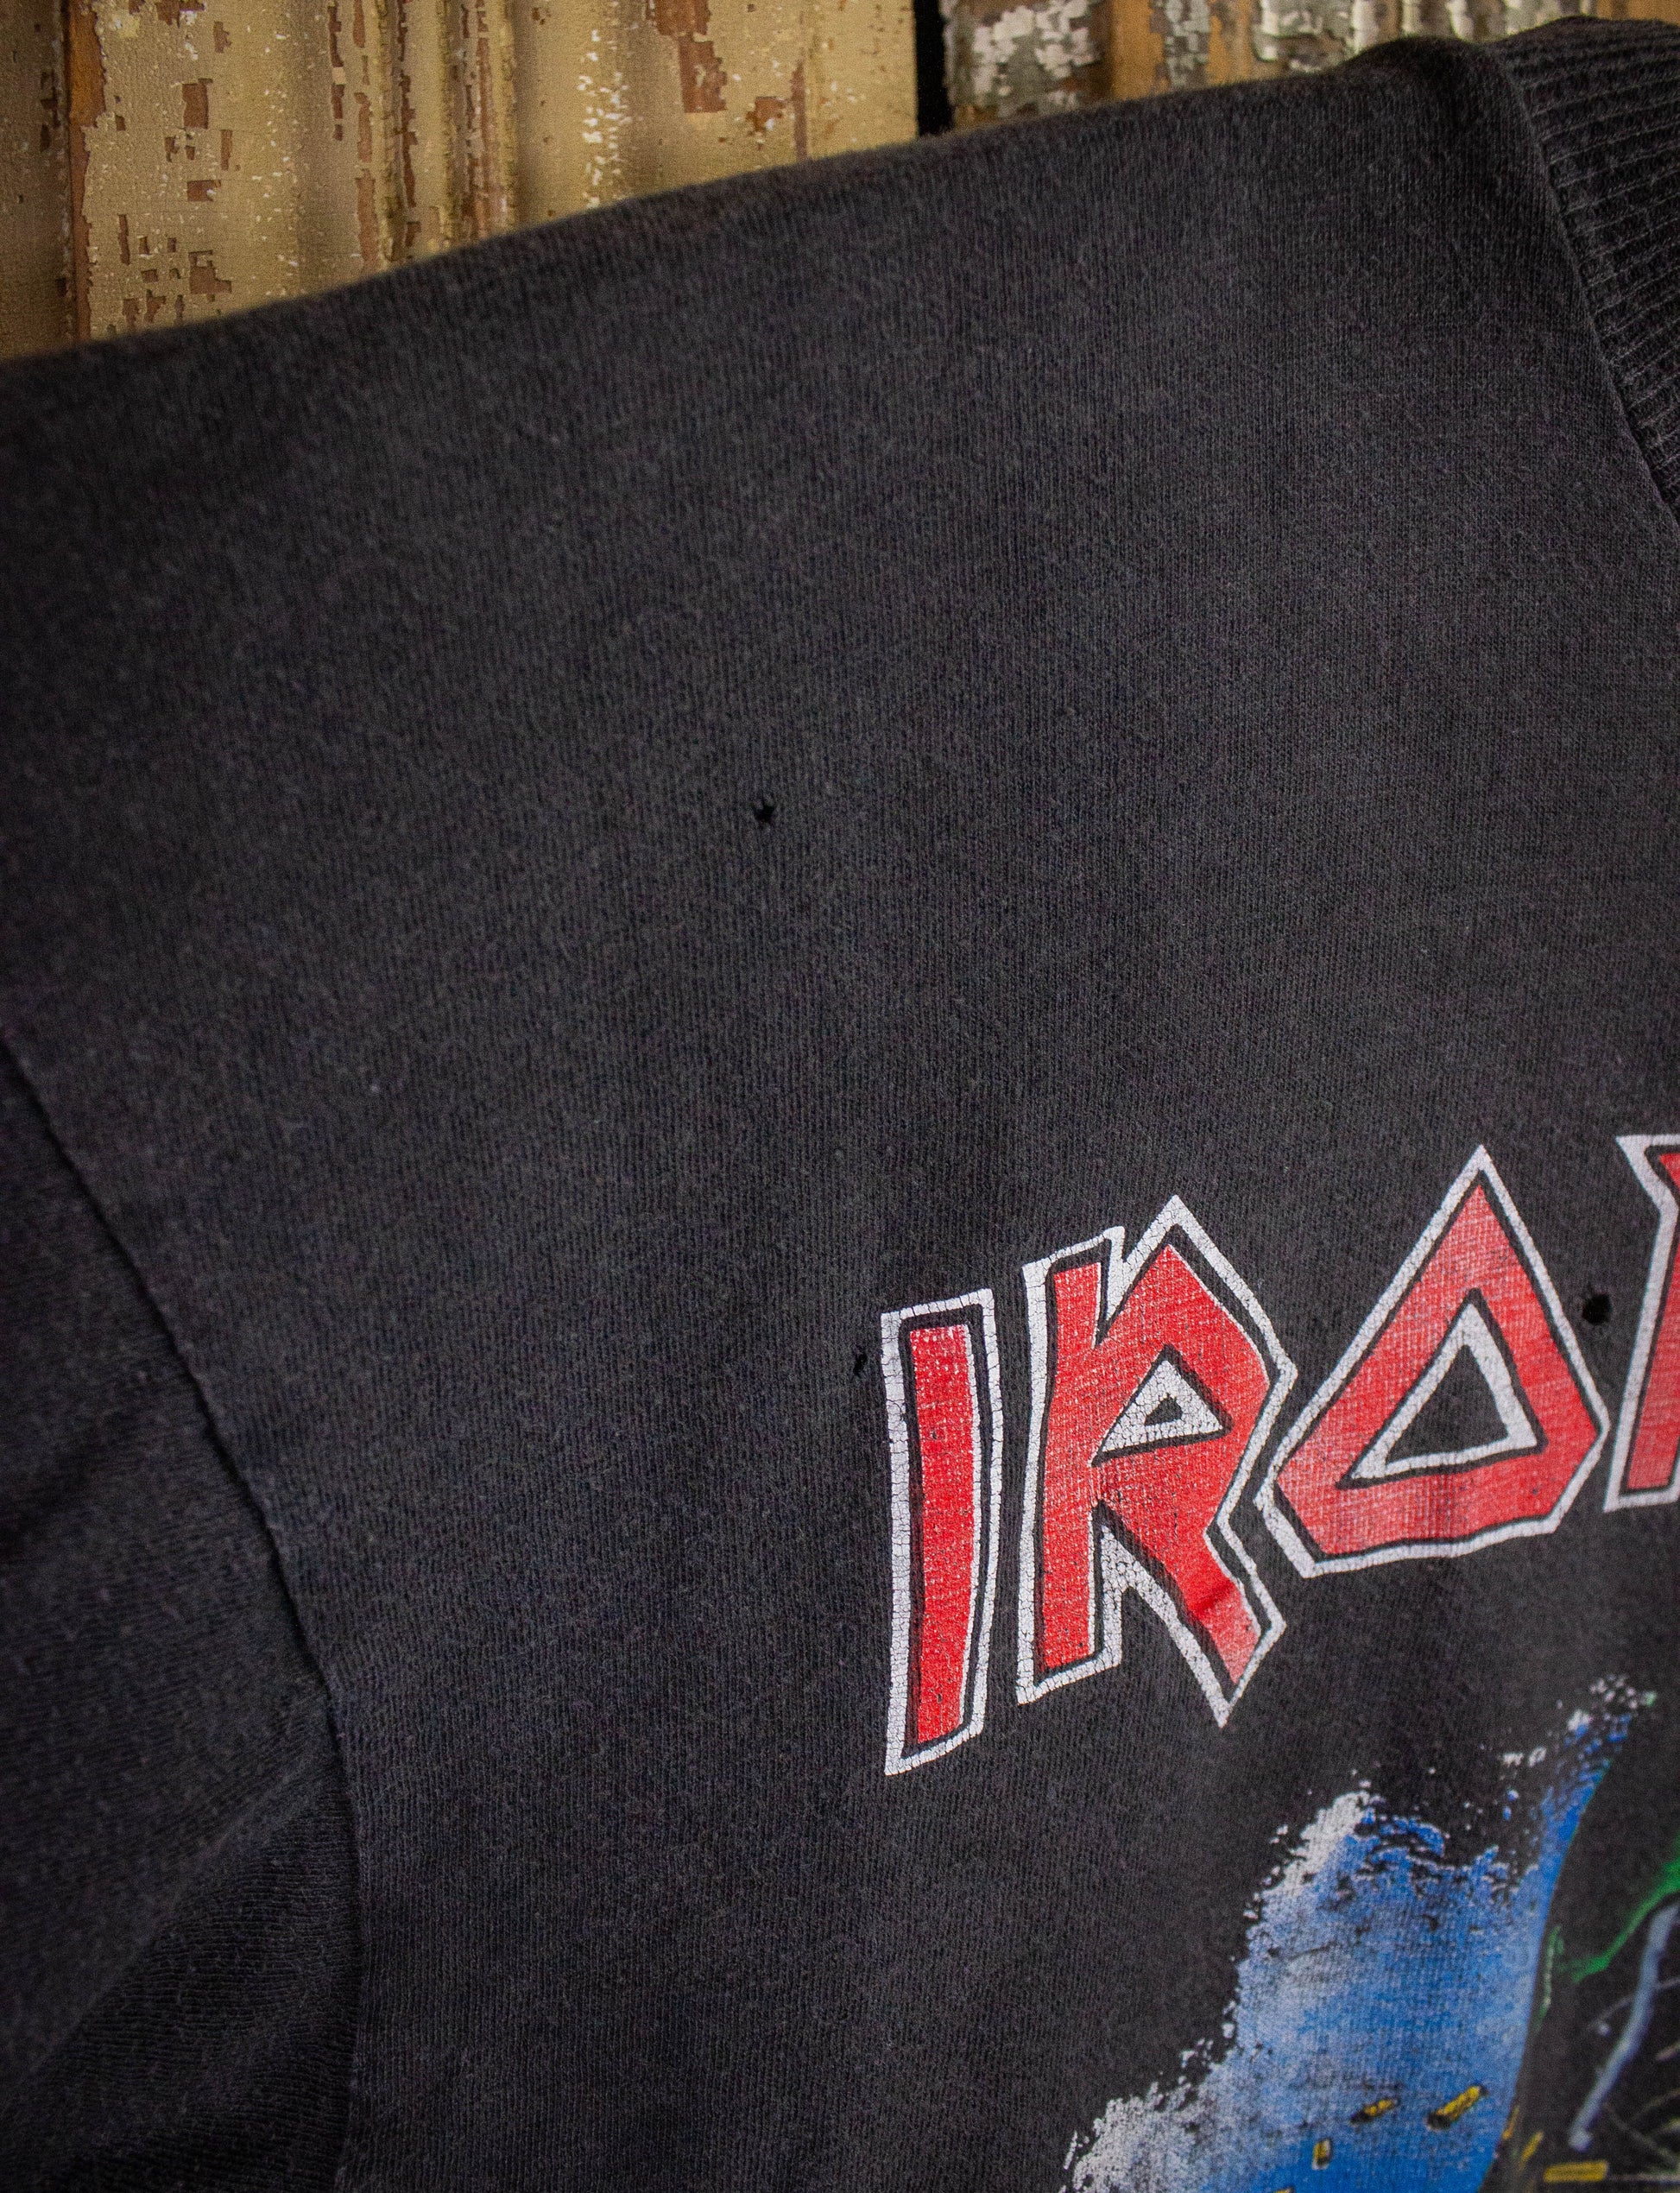 Vintage Iron Maiden No Prayer On The Road Concert T Shirt 1990 Black Medium